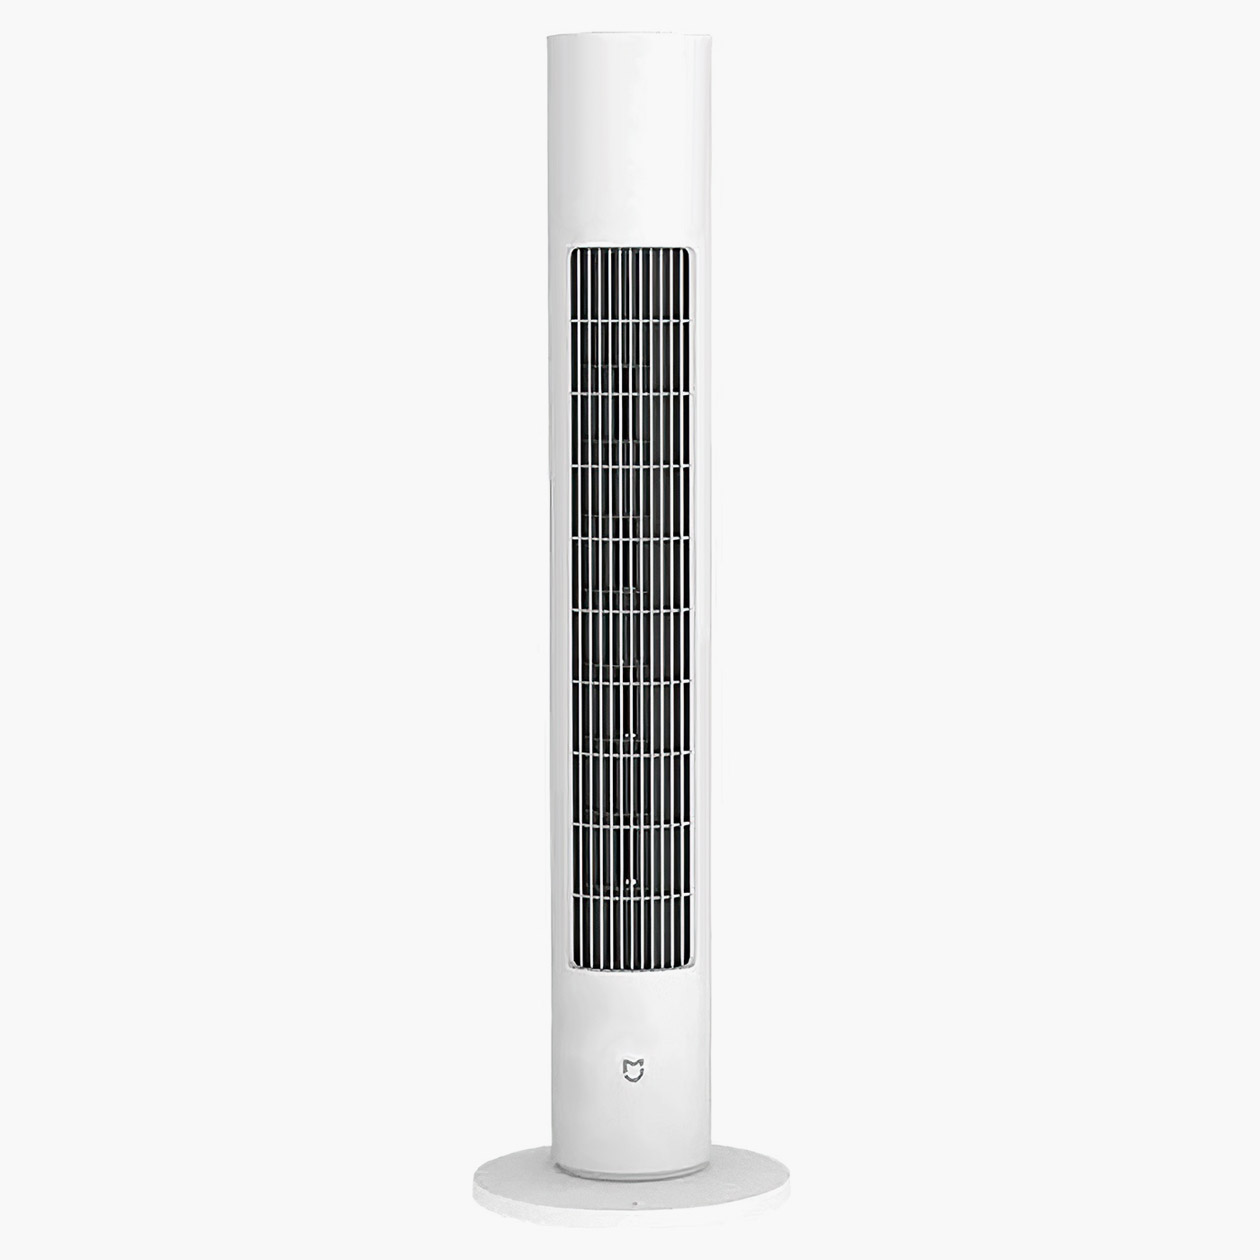 Xiaomi Mijia DC Inverter Tower Fan — тихий колонный вентилятор обдувает в широком диапазоне углов и даже имитирует звуки леса. На «Яндекс-маркете» — от 7390 ₽